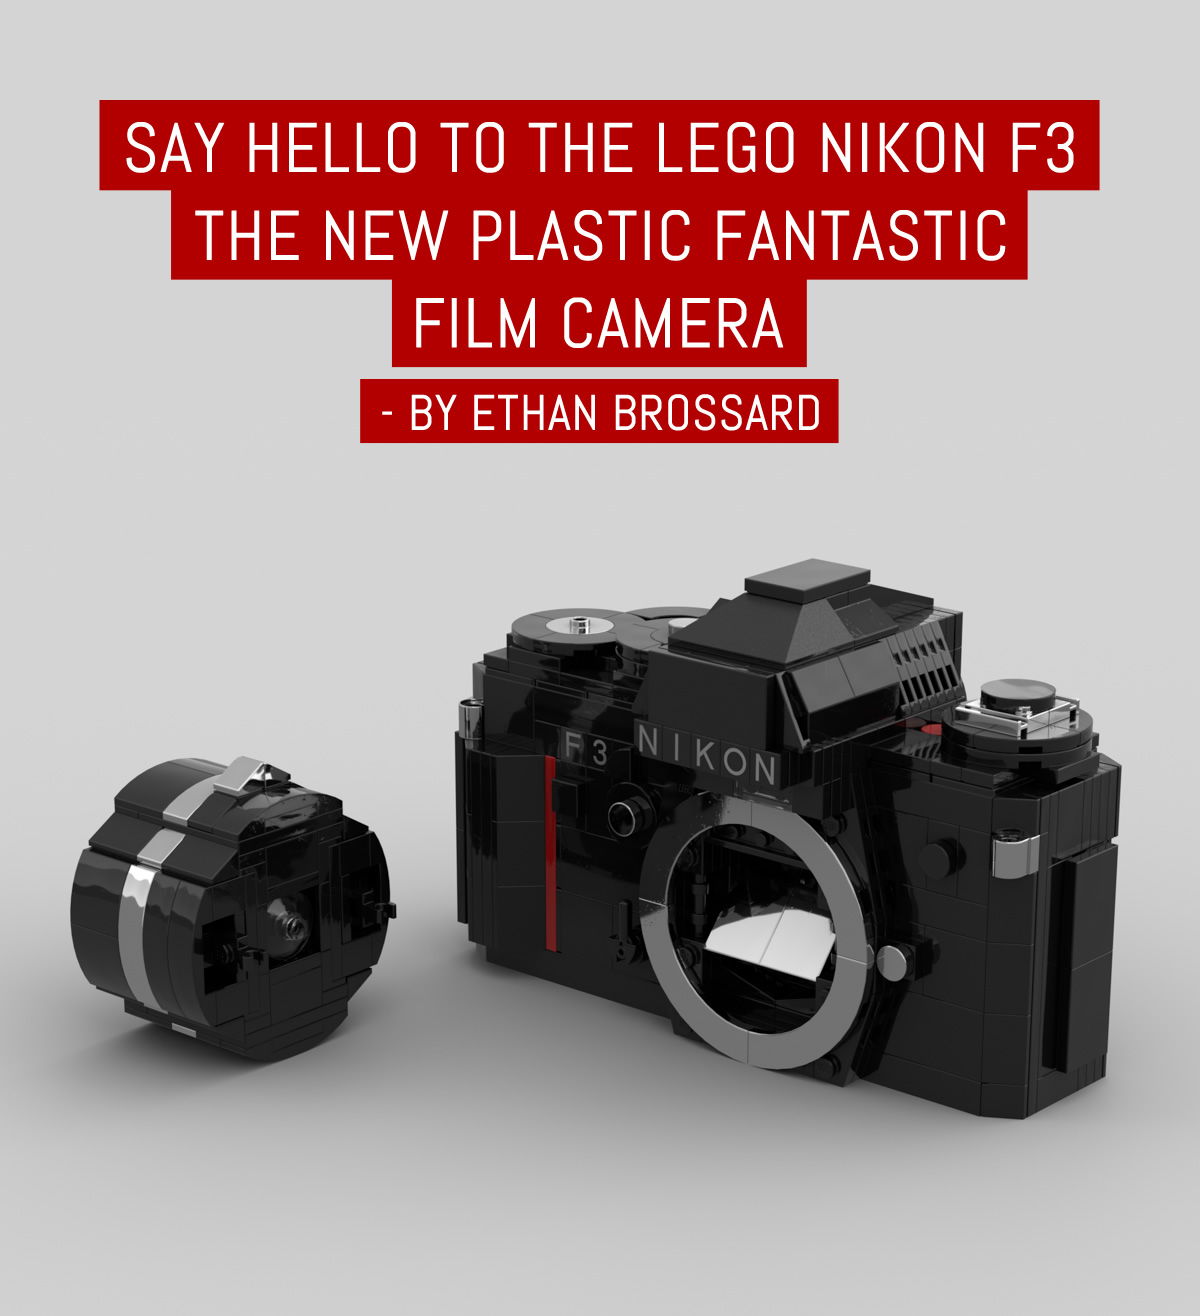 Say hello to the LEGO Nikon F3, the new "plastic fantastic" film camera